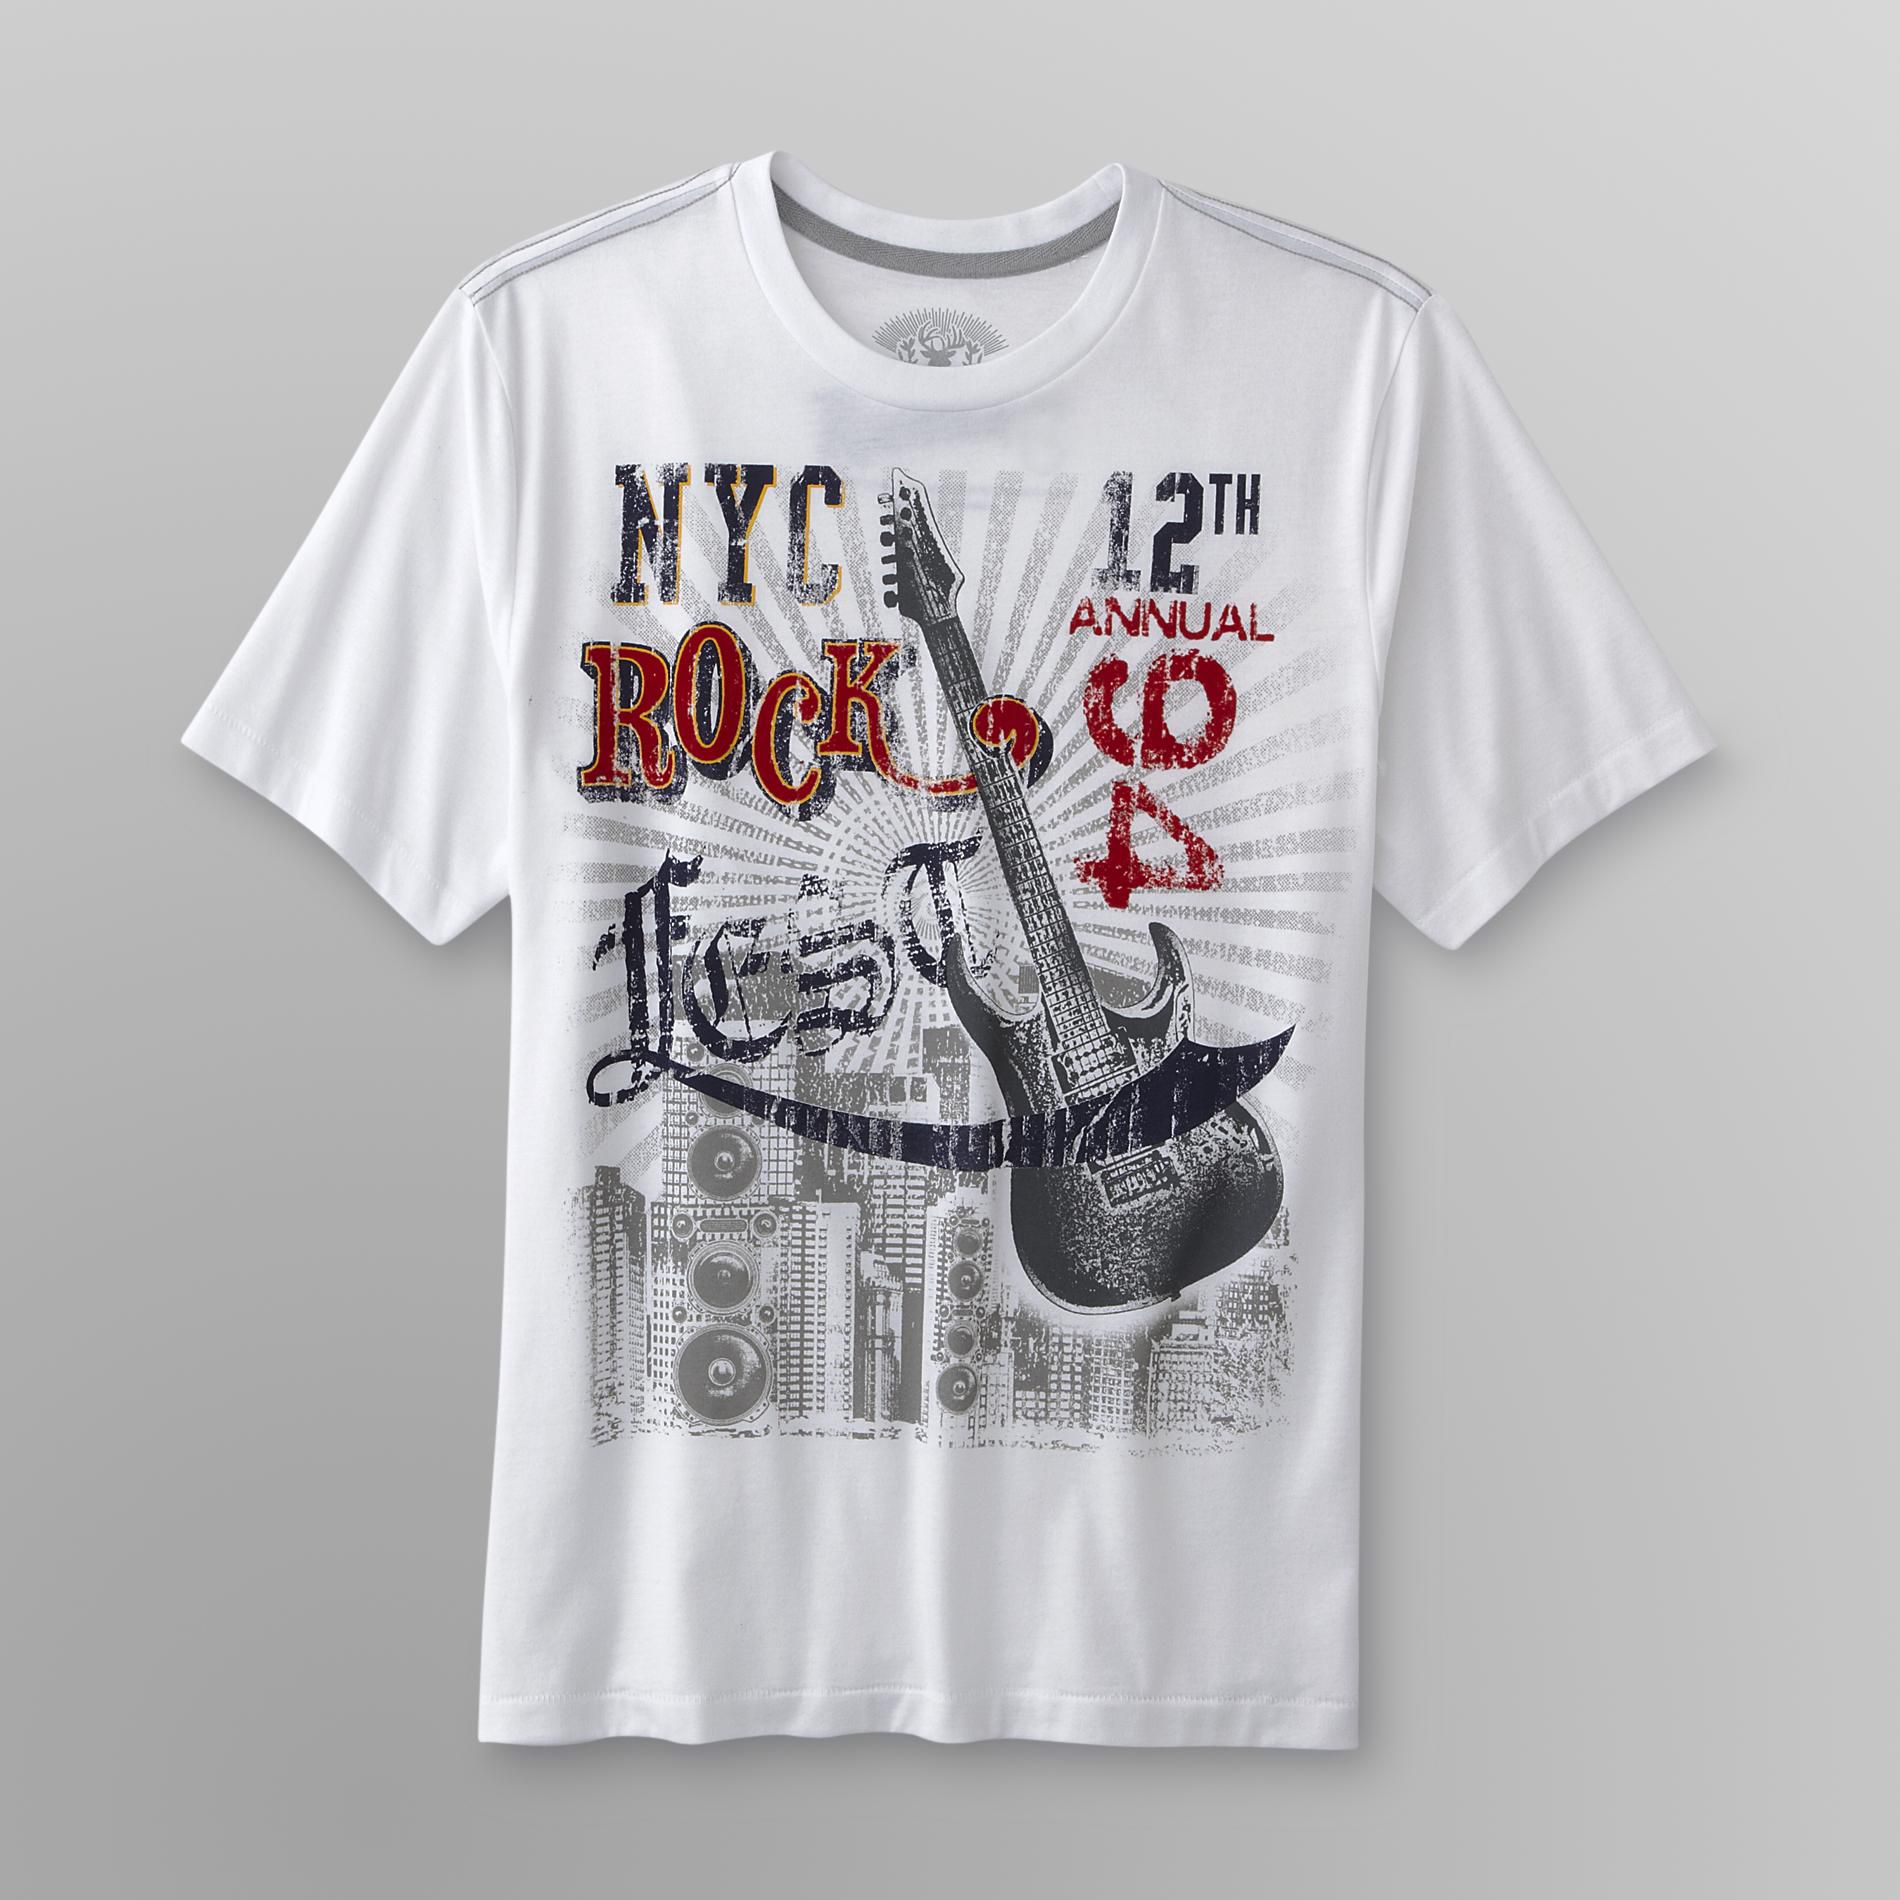 Roebuck & Co. Young Men's Graphic T-Shirt